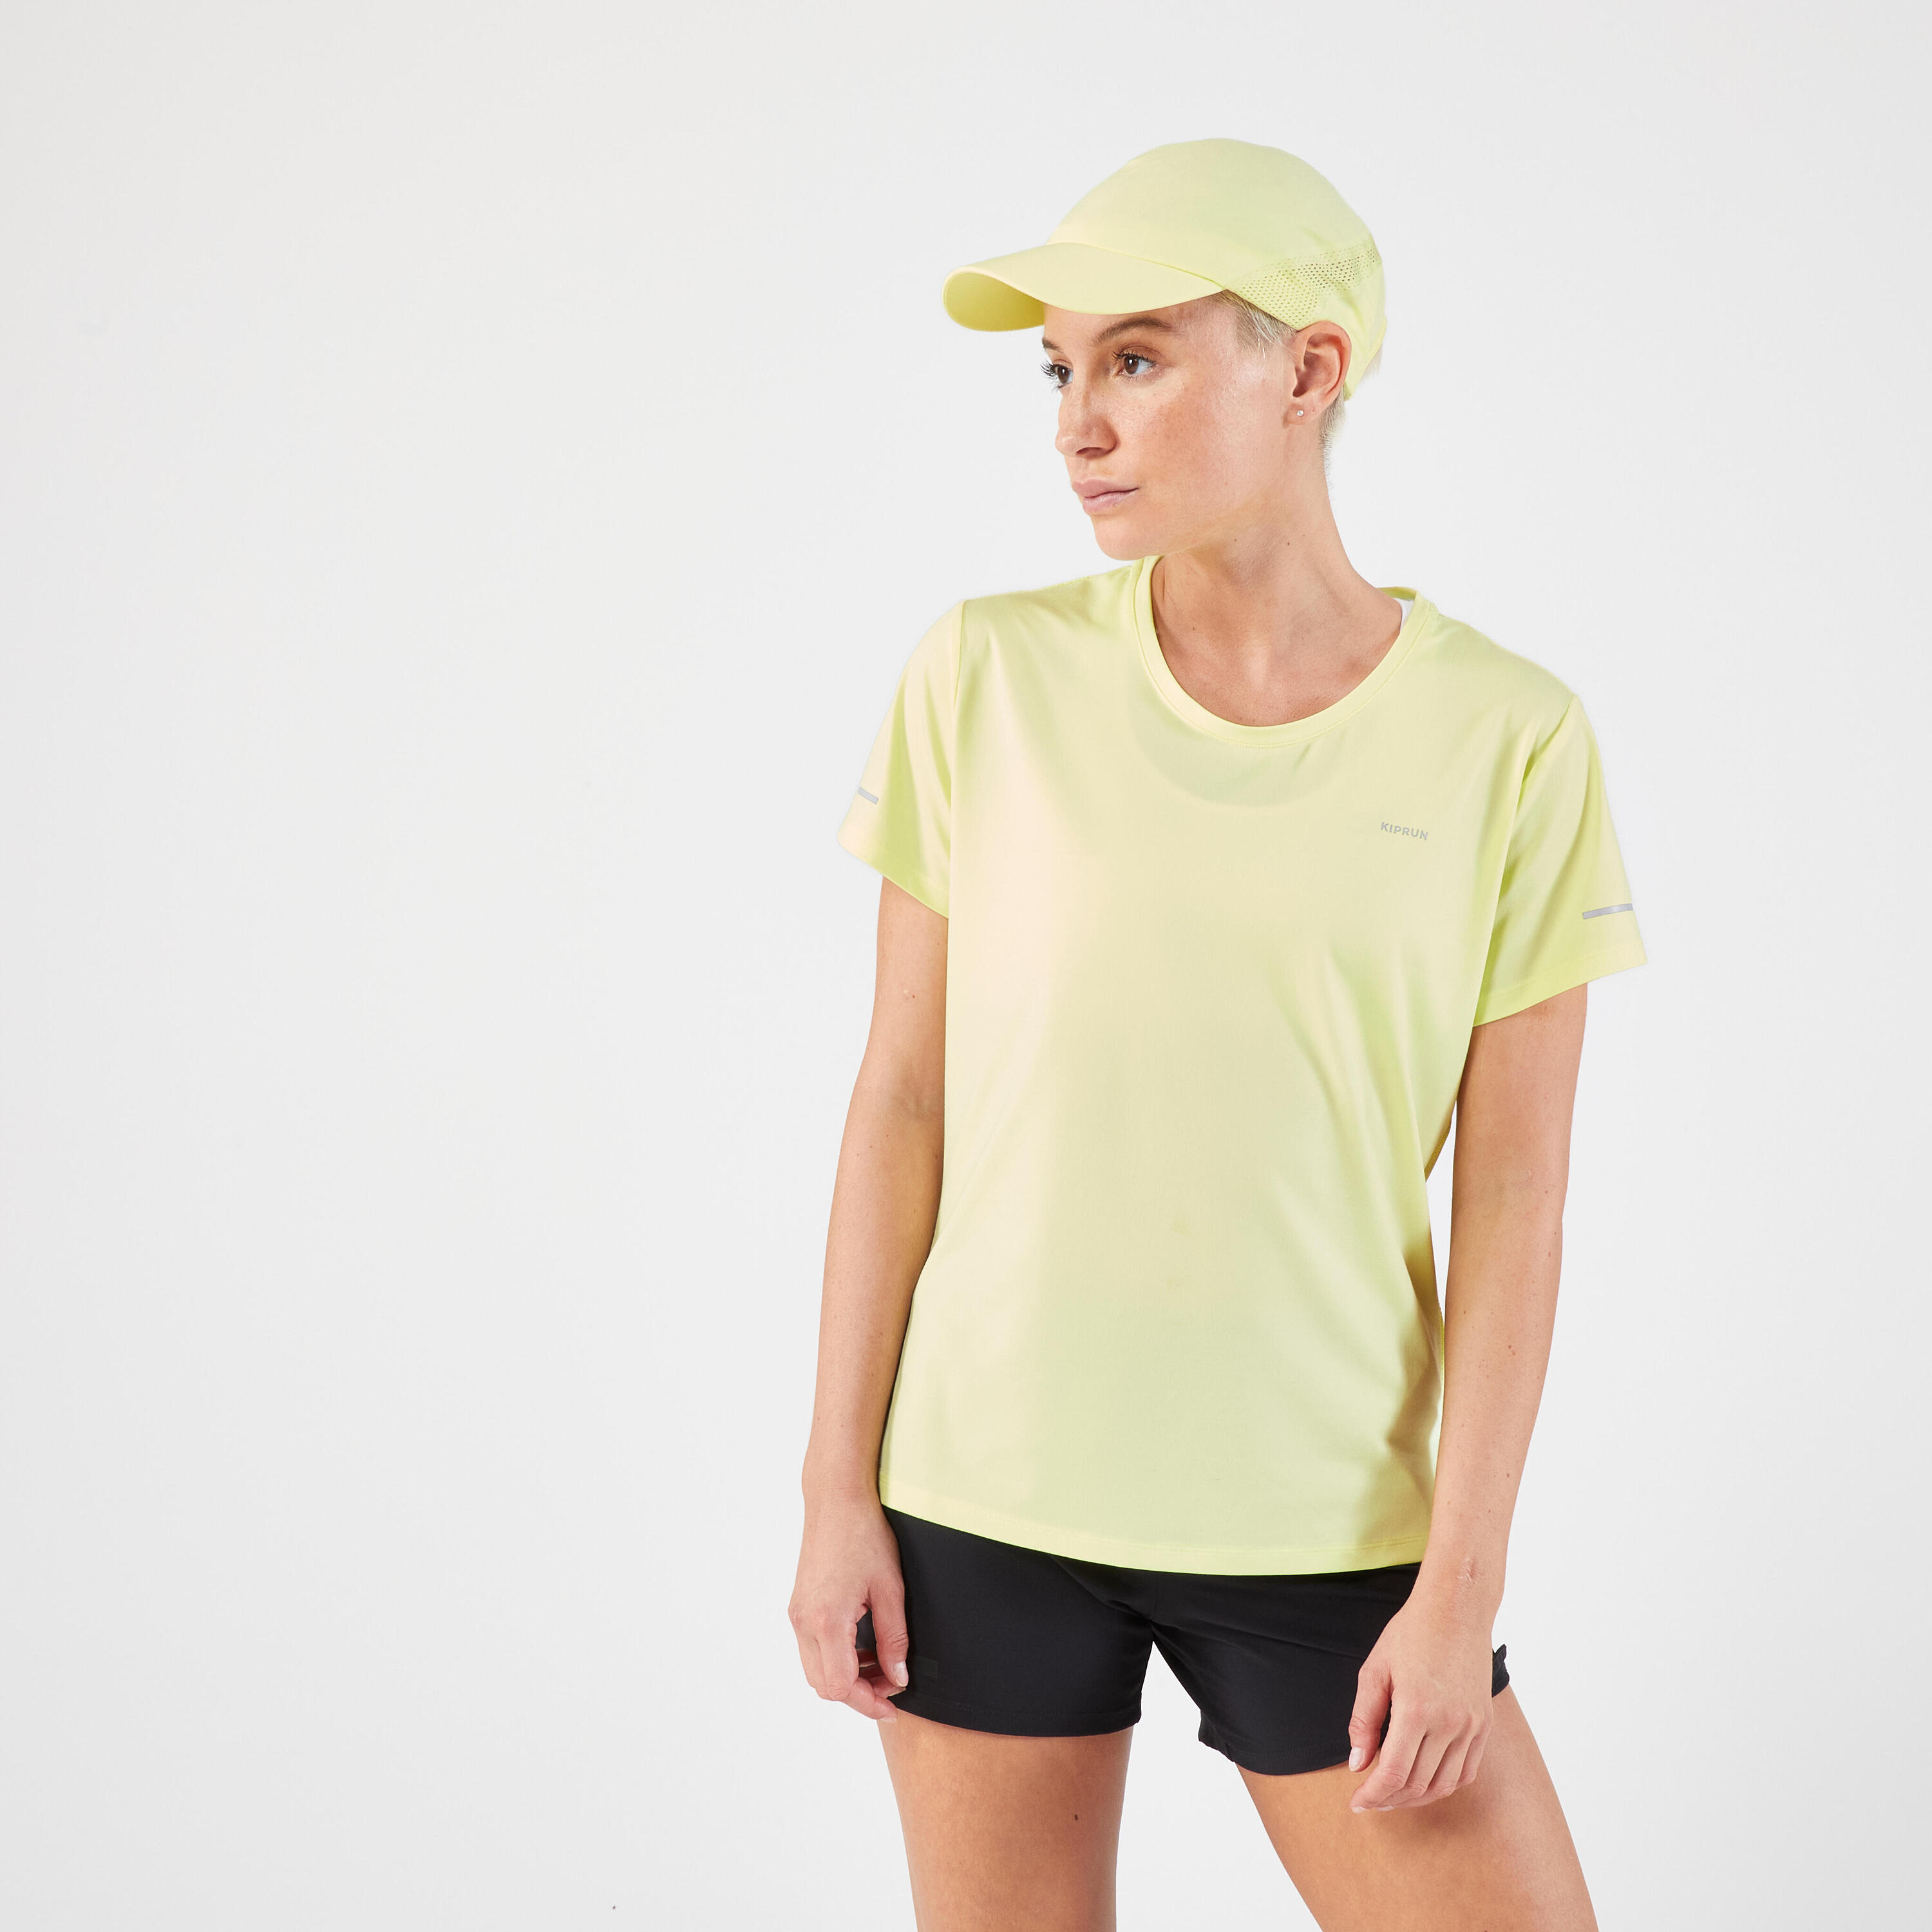 Men's Women's KIPRUN Running Adjustable Cap - yellow 6/9